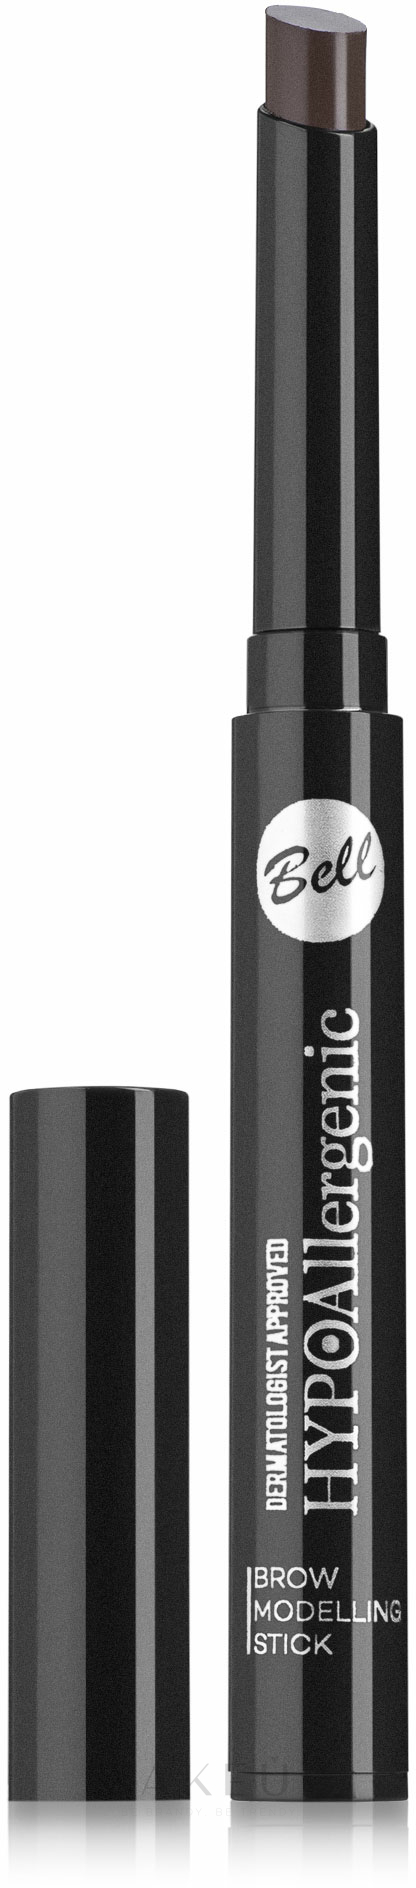 Brauenwachs-Stick - Bell Hypo Allergenic Brow Modelling Stick — Foto 01